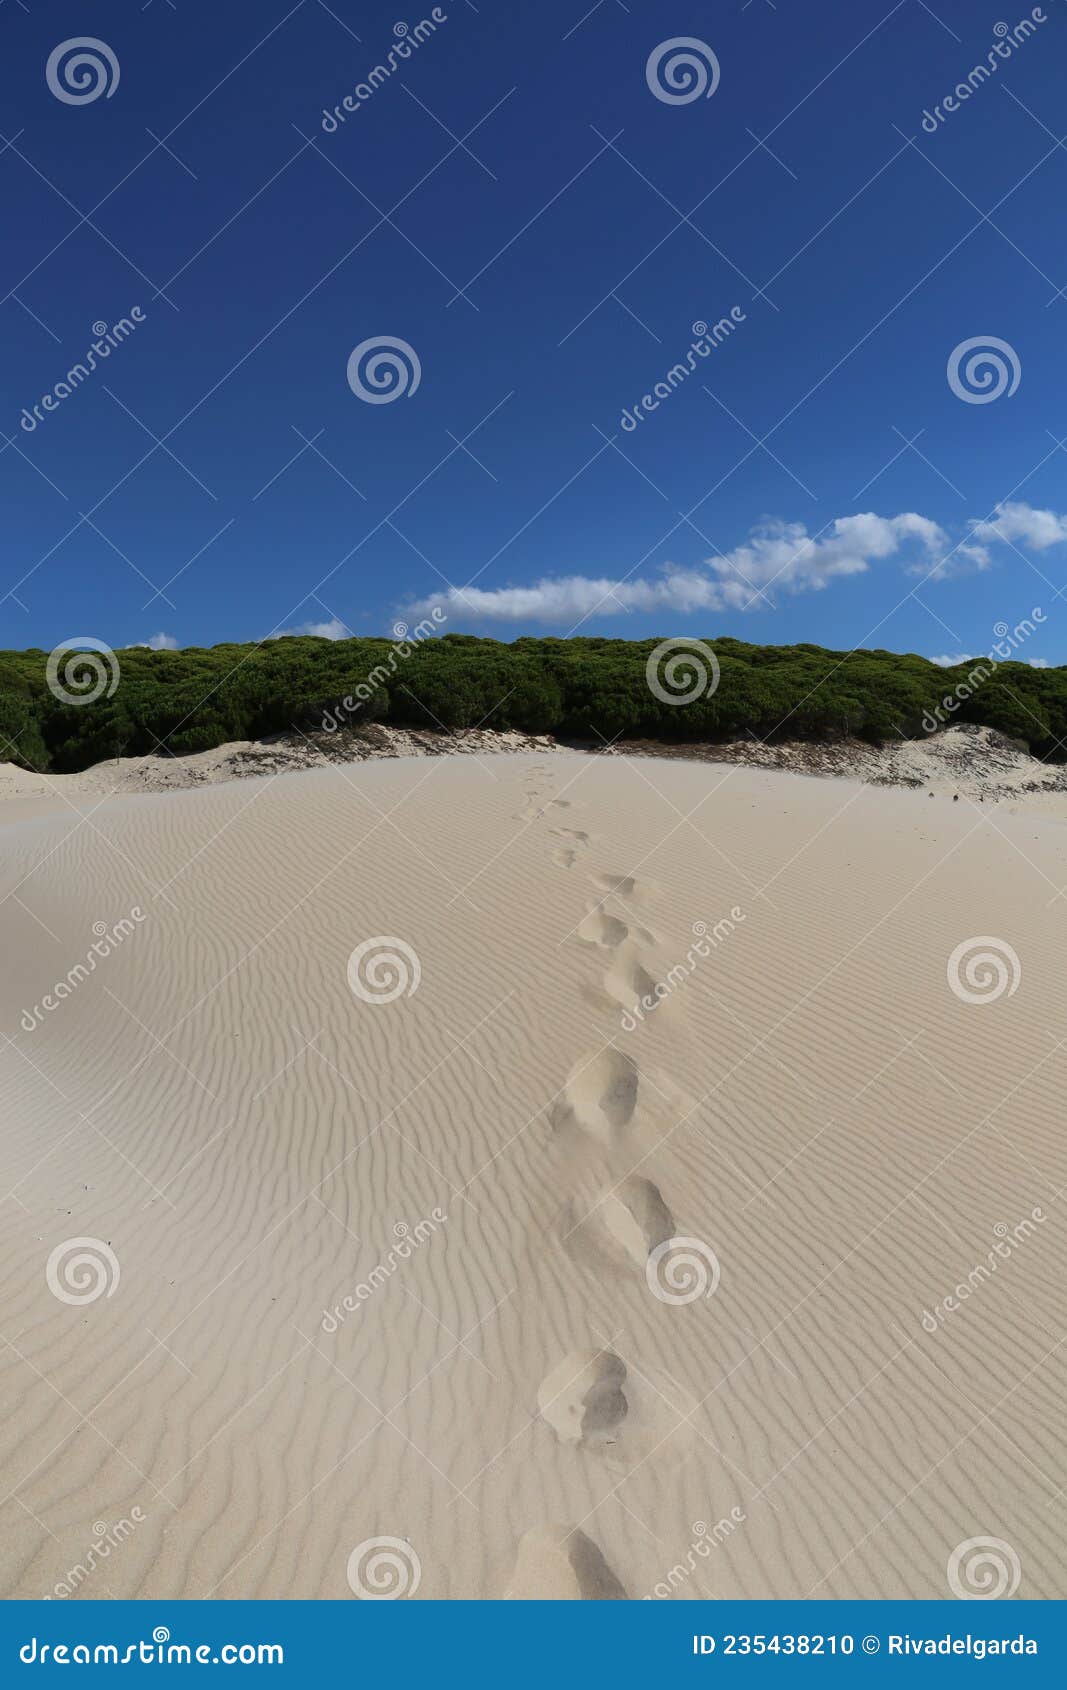 the duna de bolonia, costa de la luz